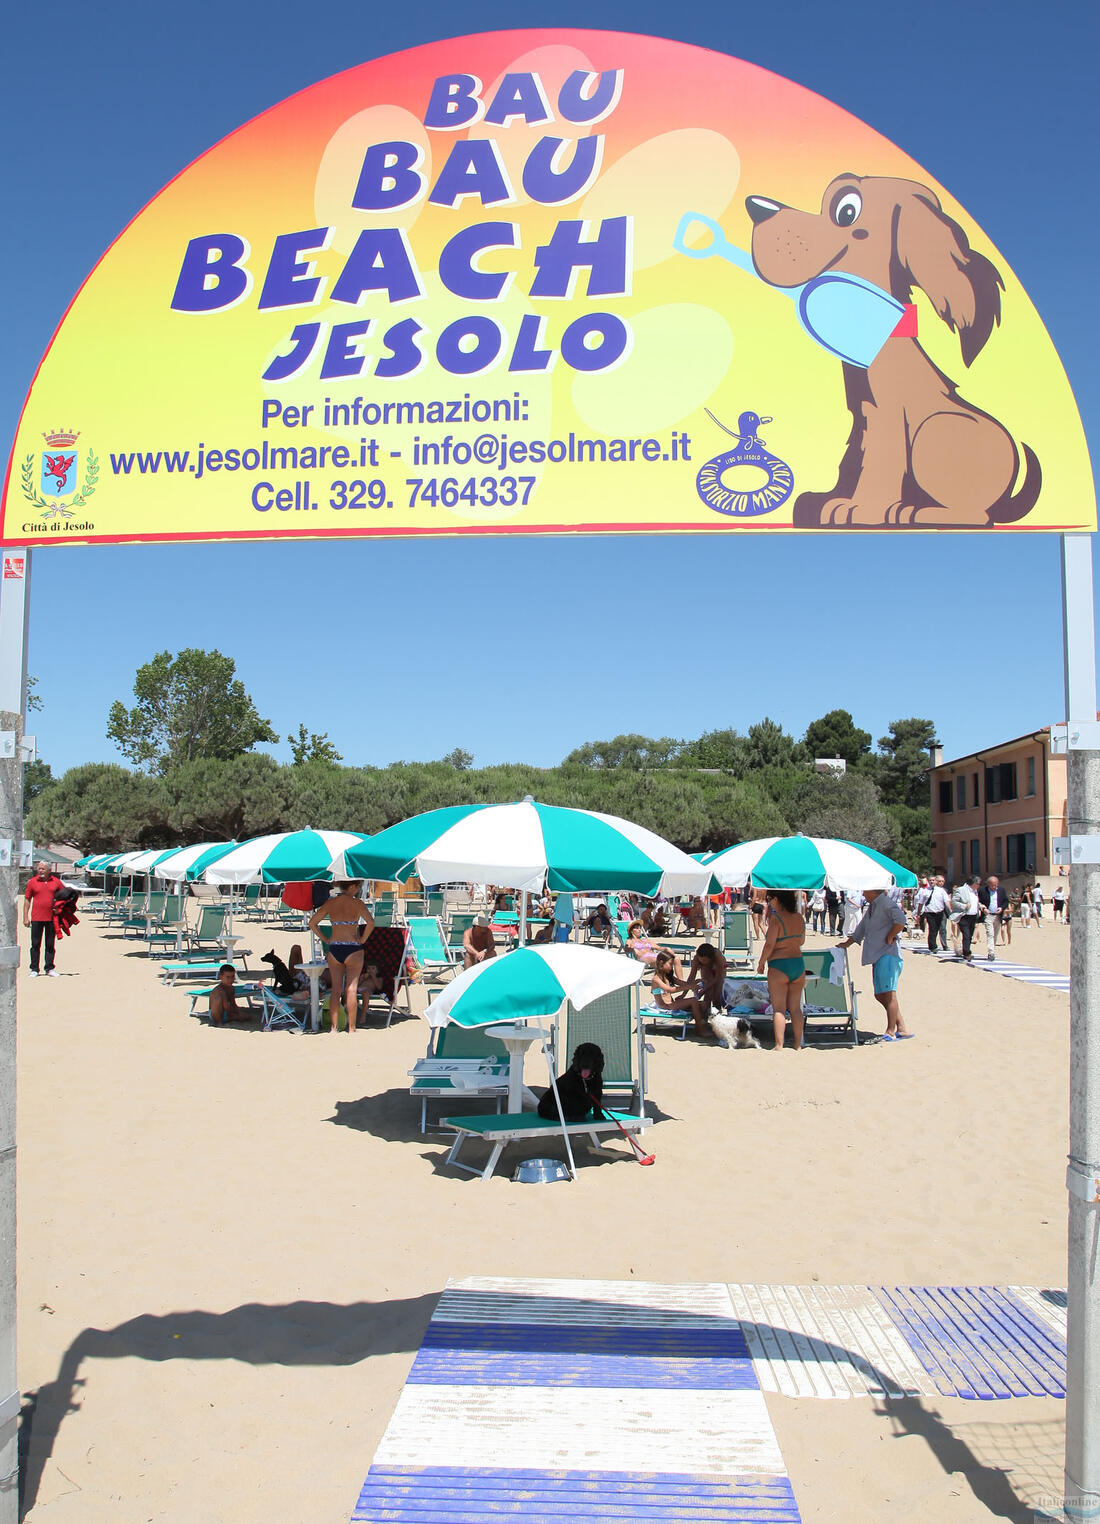 Psia pláž Bau Bau Beach Jesolo